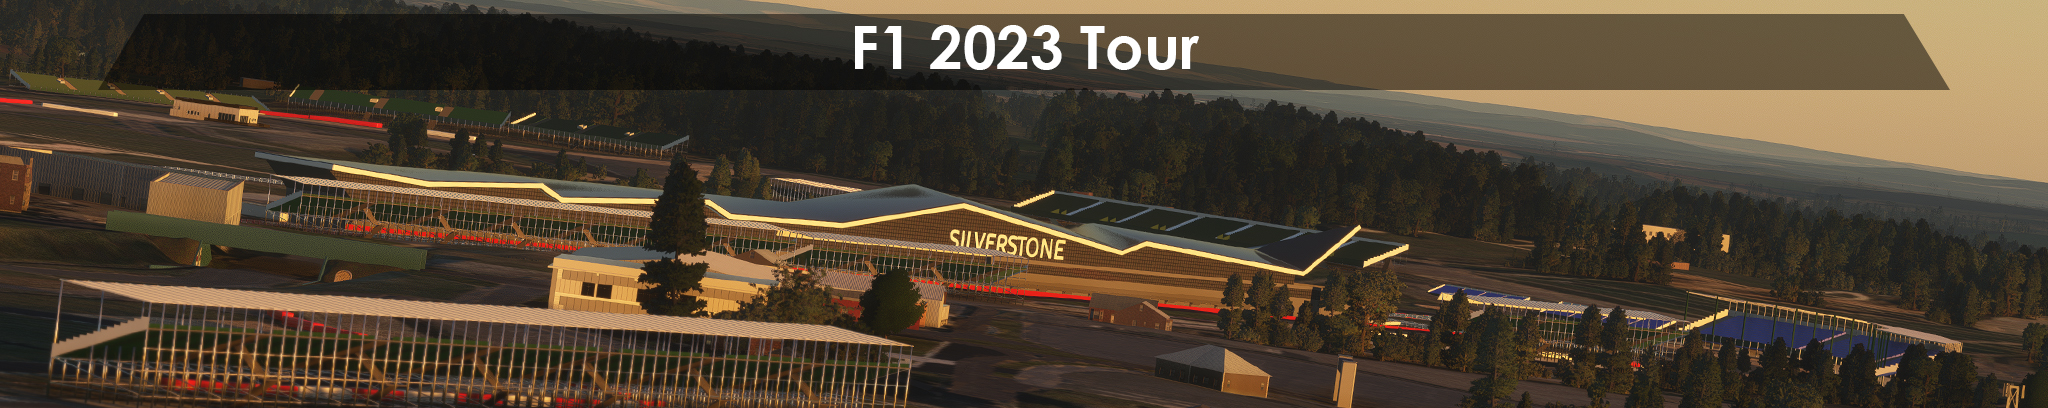 F1 2023 Tour